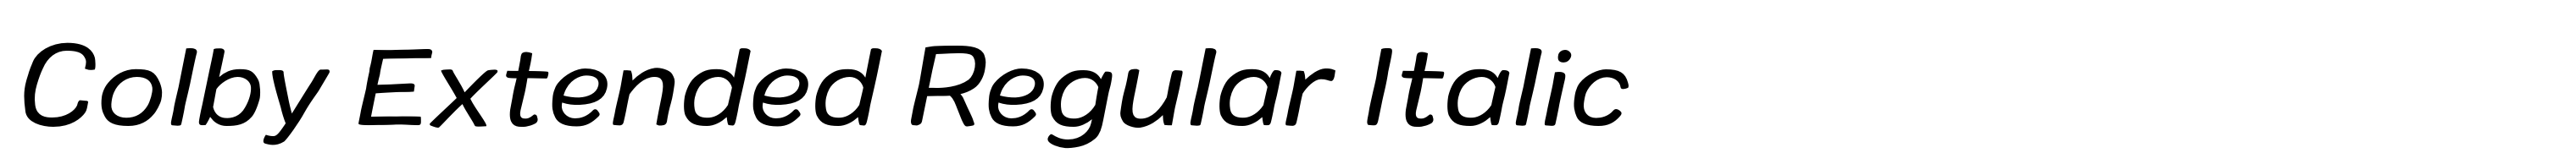 Colby Extended Regular Italic